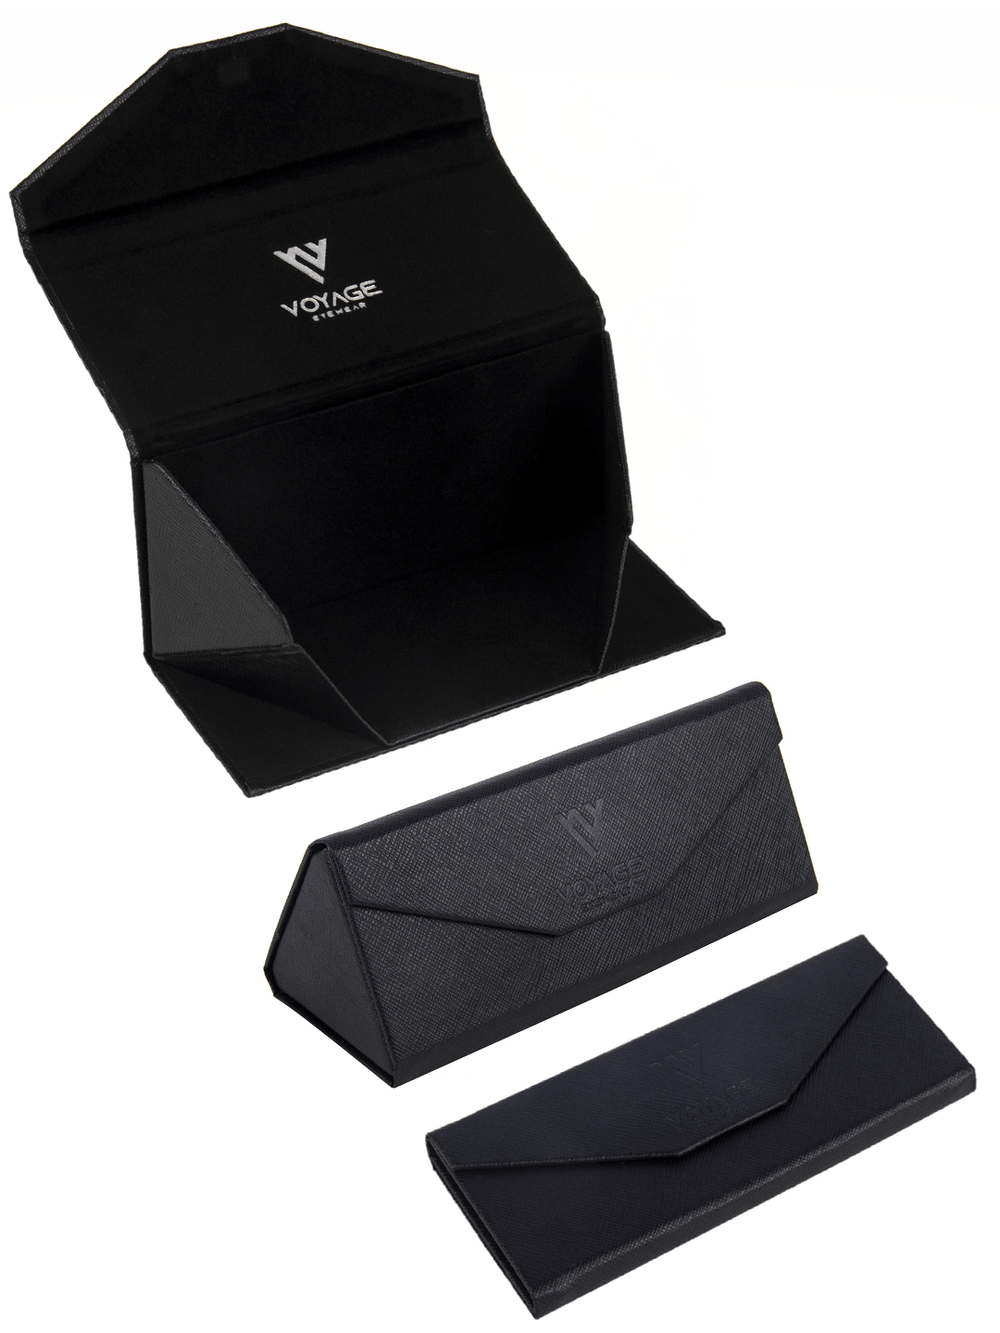 Voyage Exclusive Black Polarized Square Sunglasses for Men & Women - PMG4433